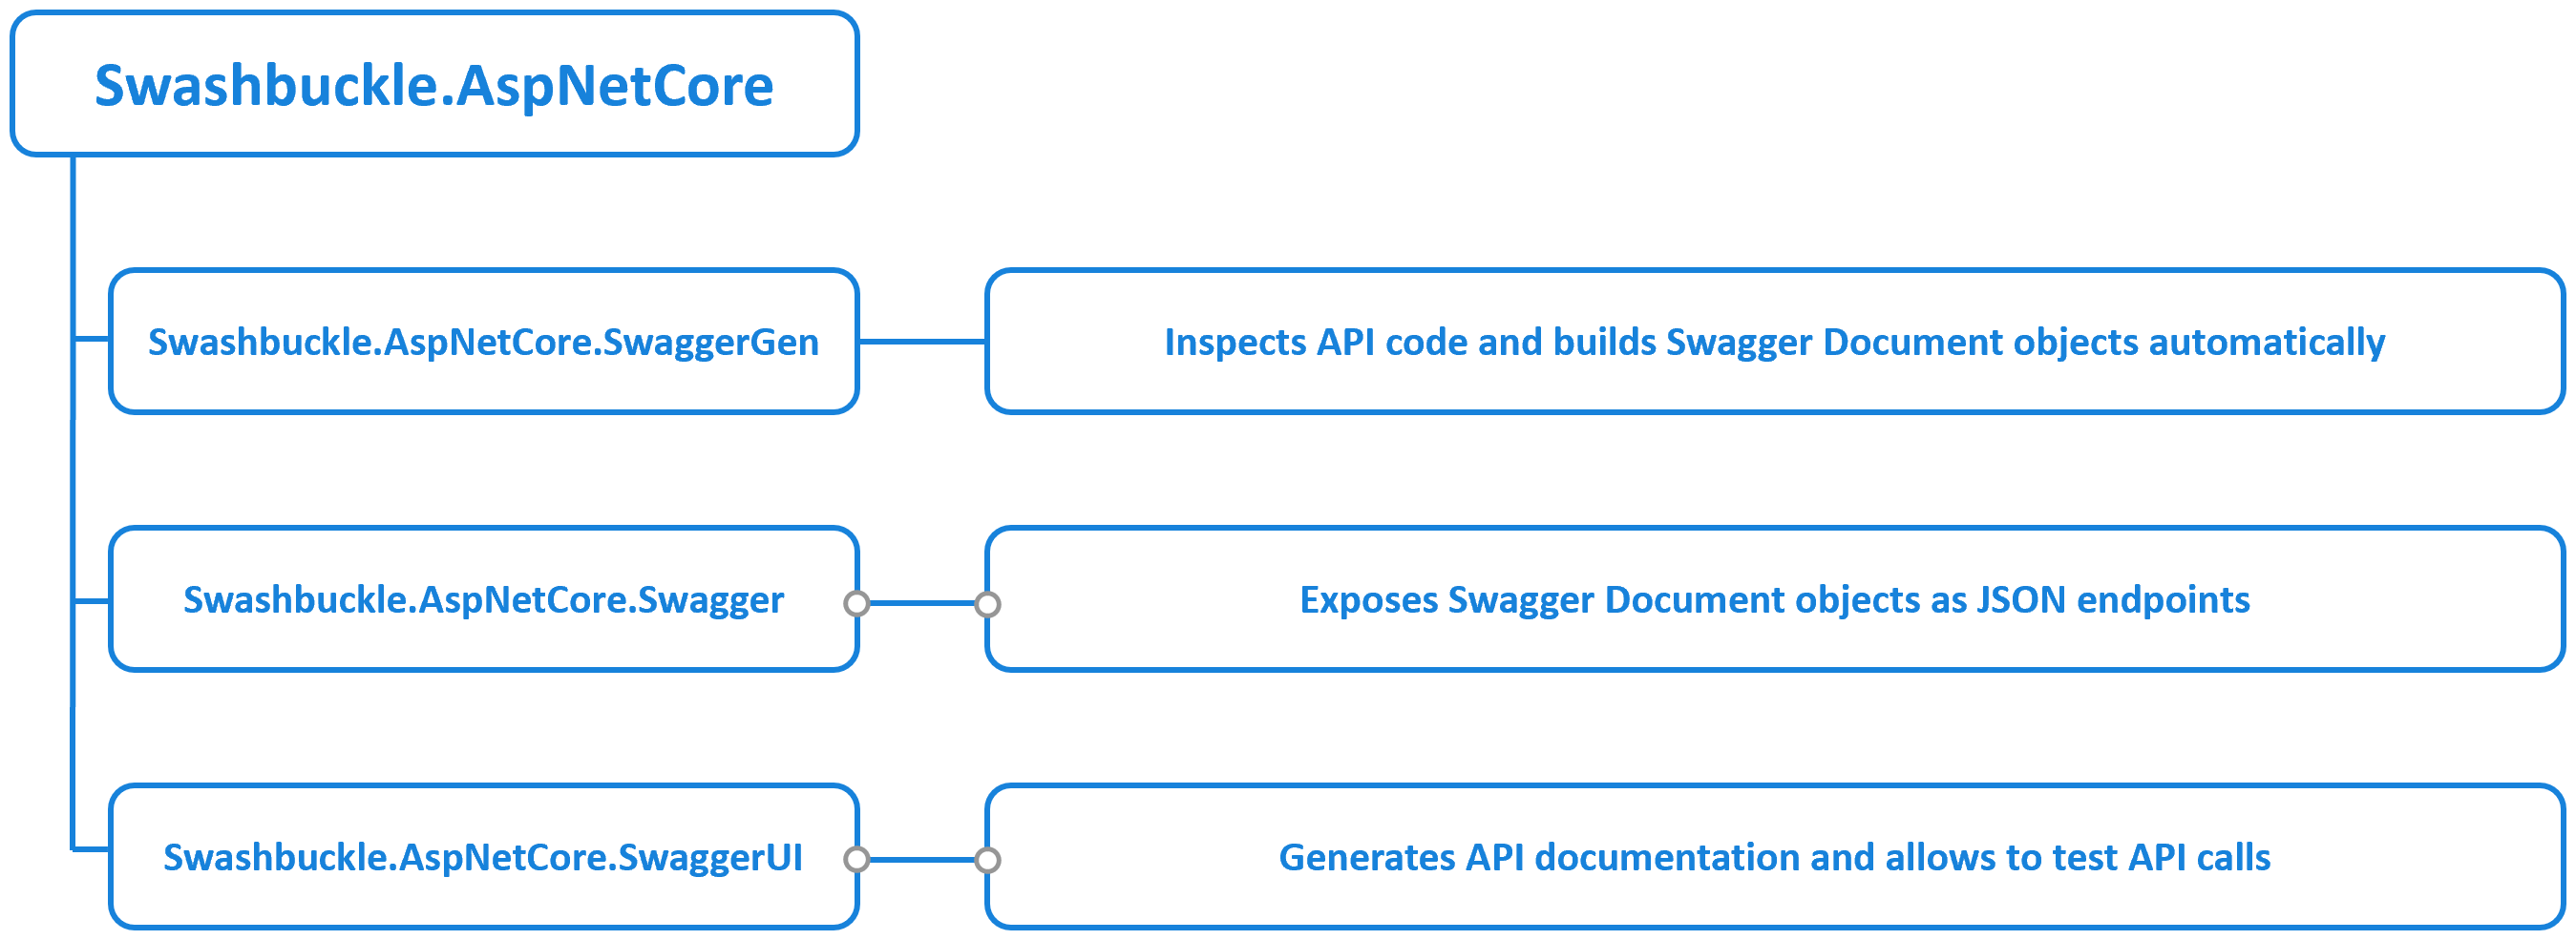 asp.net core swagger documentation